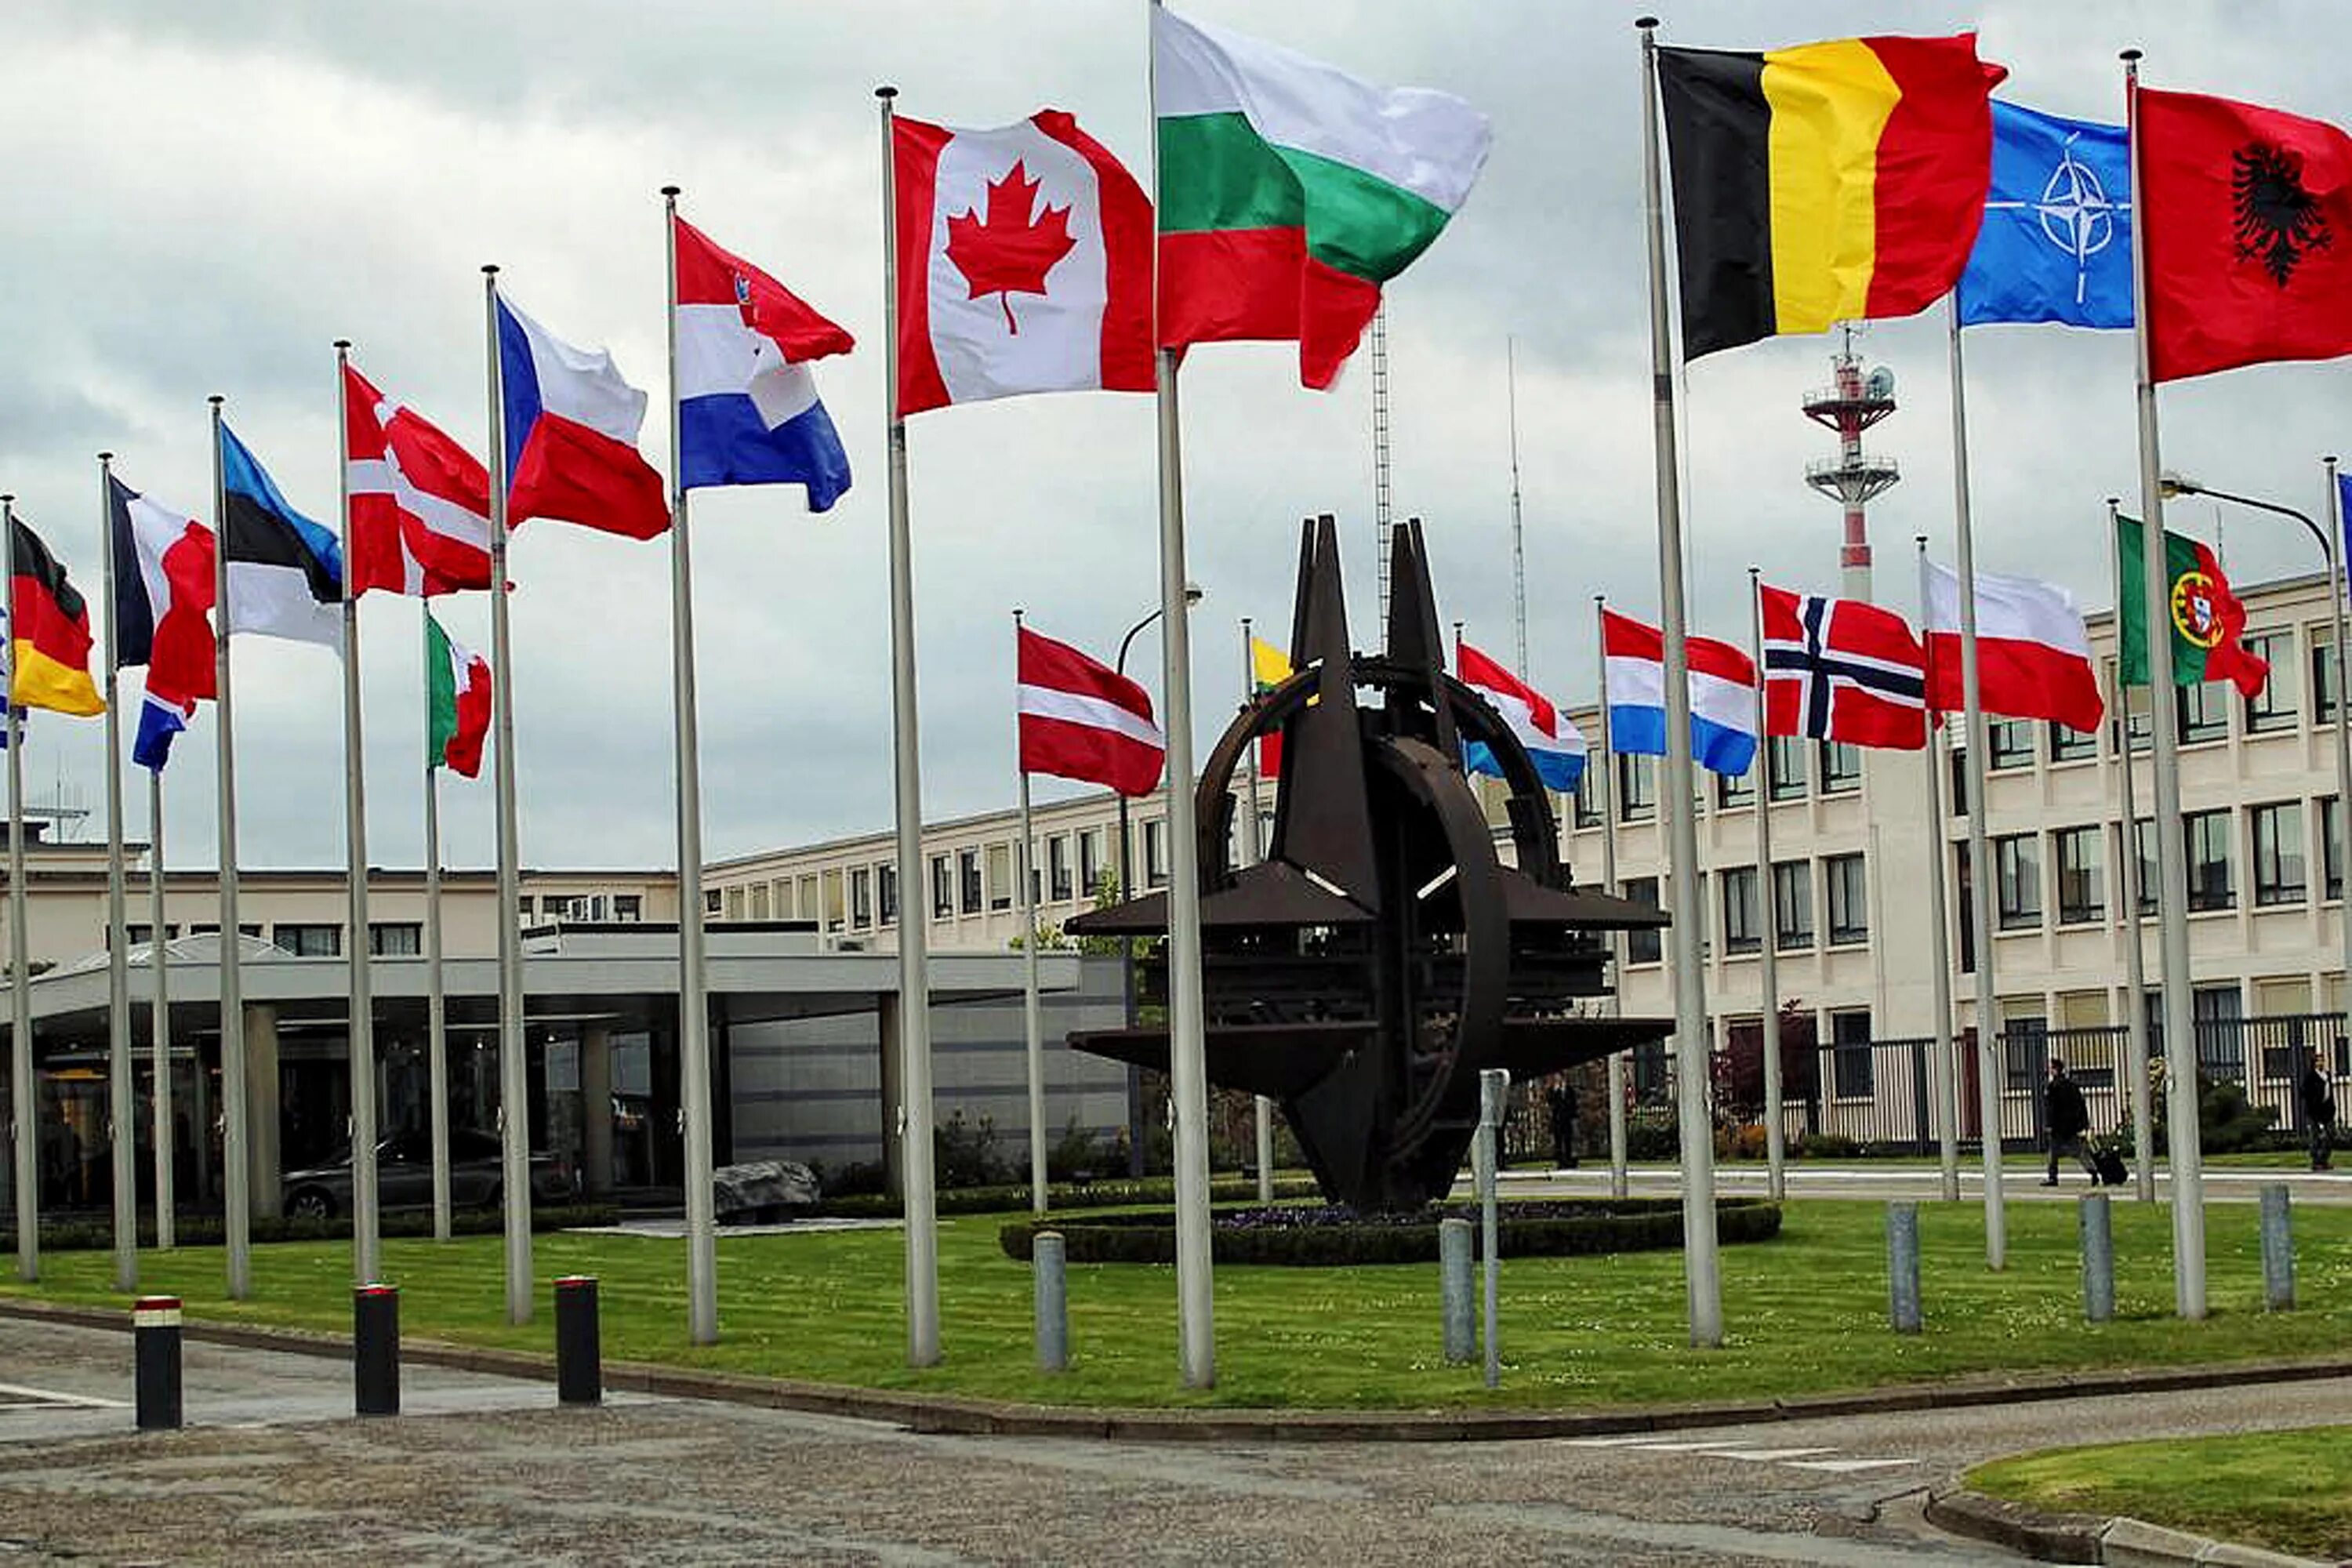 Генштаб нато. Штаб-квартира НАТО В Брюсселе. Флаг НАТО штаб квартира НАТО В Брюсселе. Штаб квартира НАТО Германия. Брюссель столица НАТО.